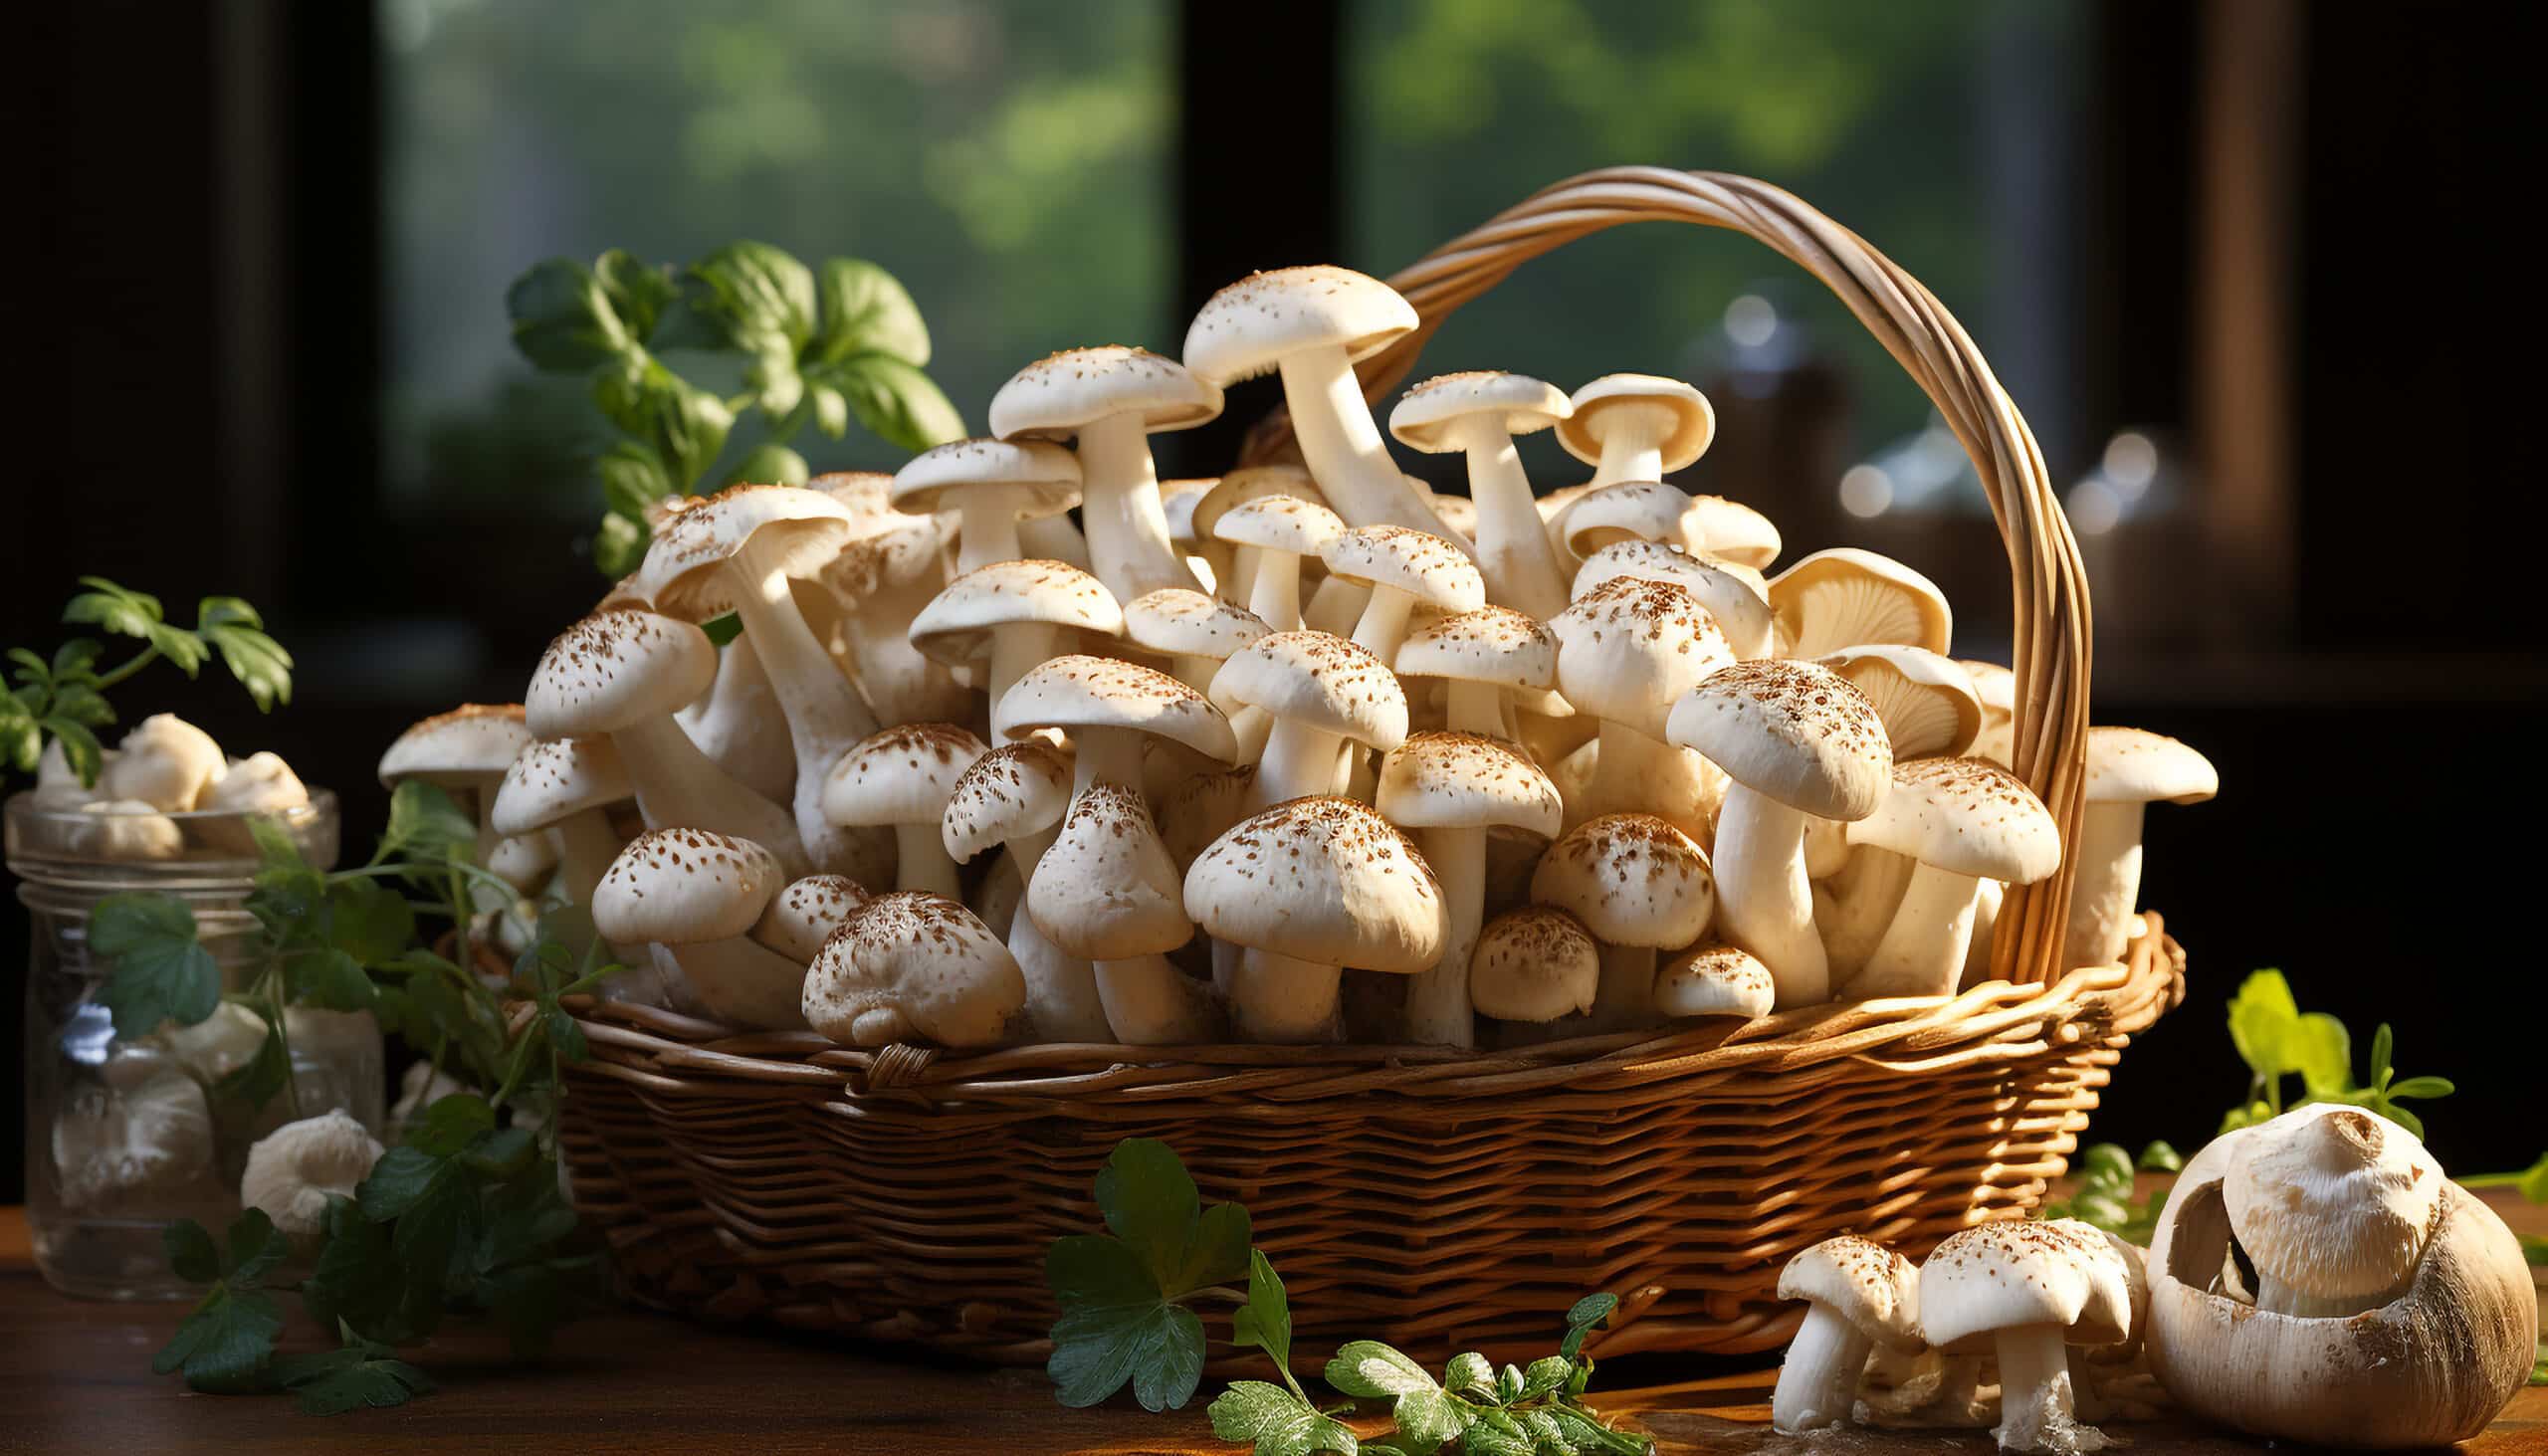 growmyownhealthfood.com : How long typically does mushroom cultivation take?